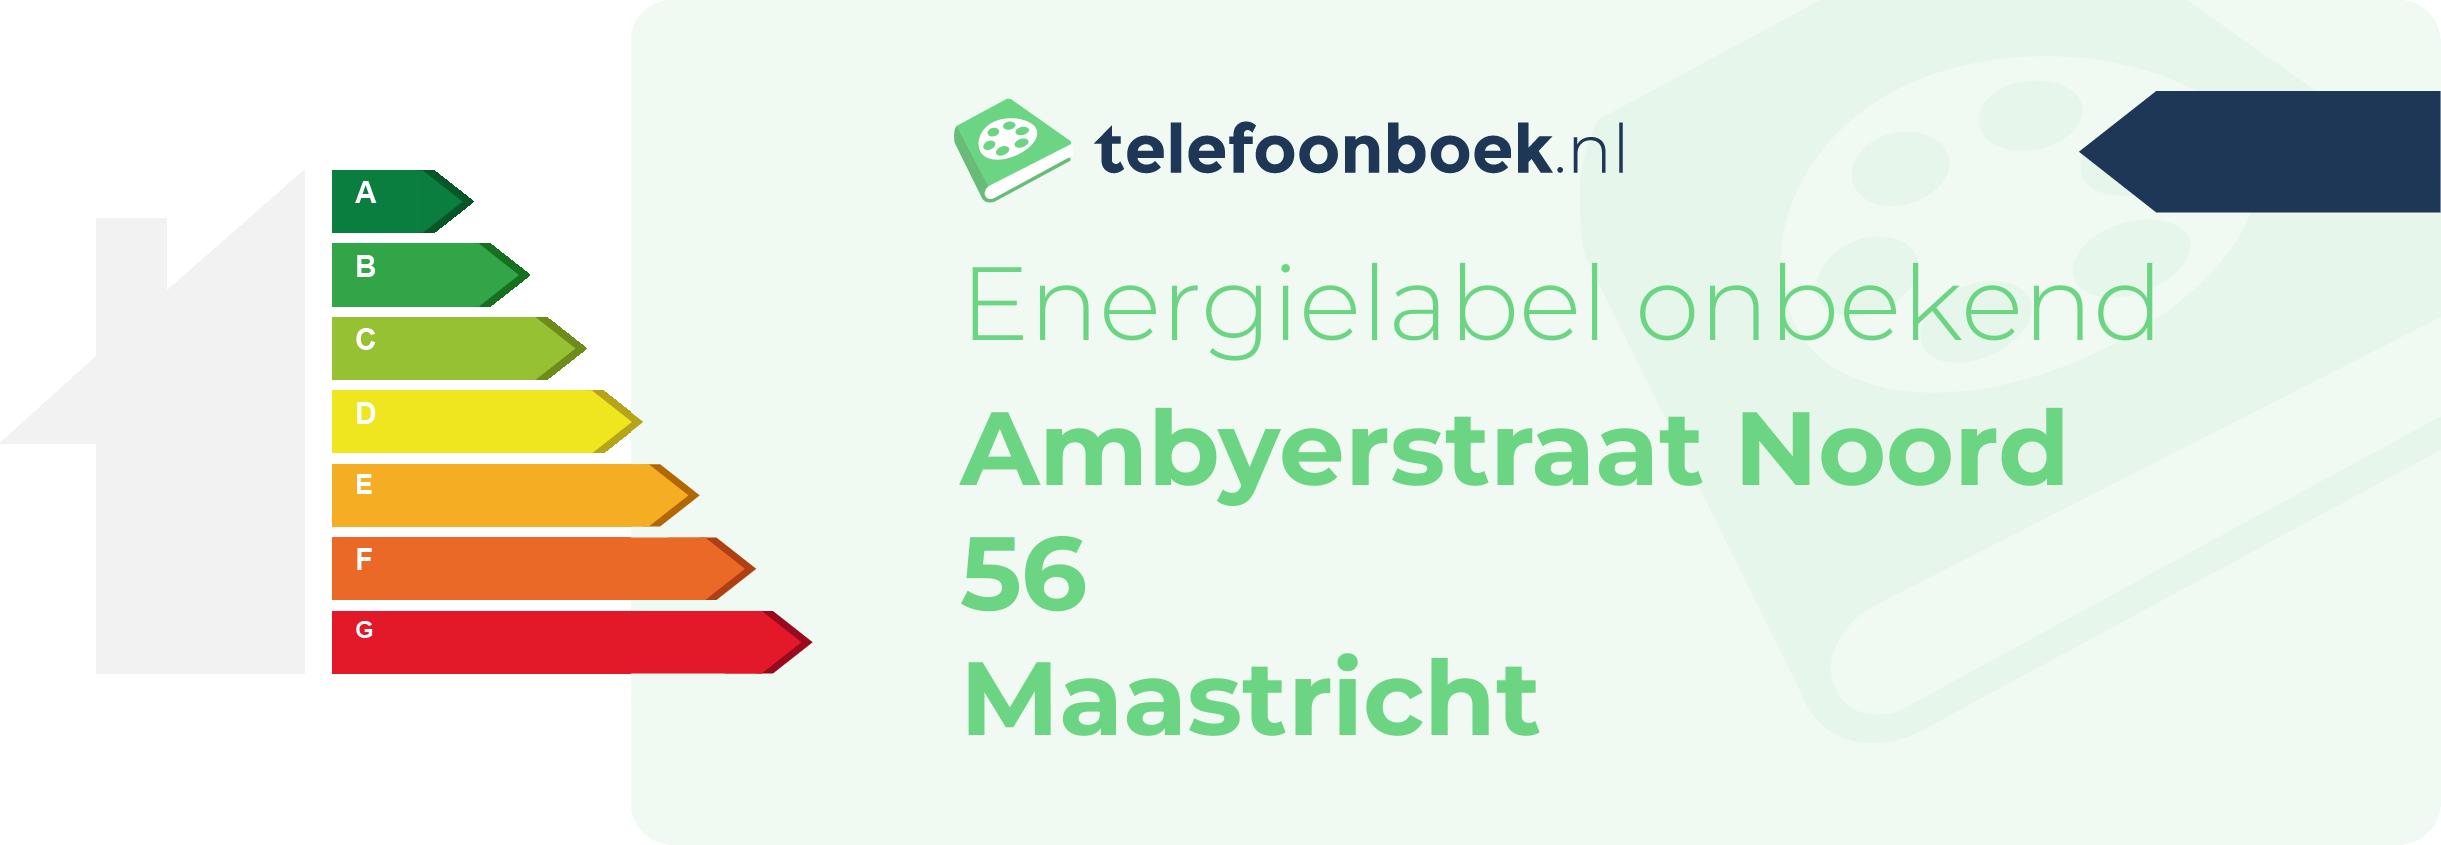 Energielabel Ambyerstraat Noord 56 Maastricht